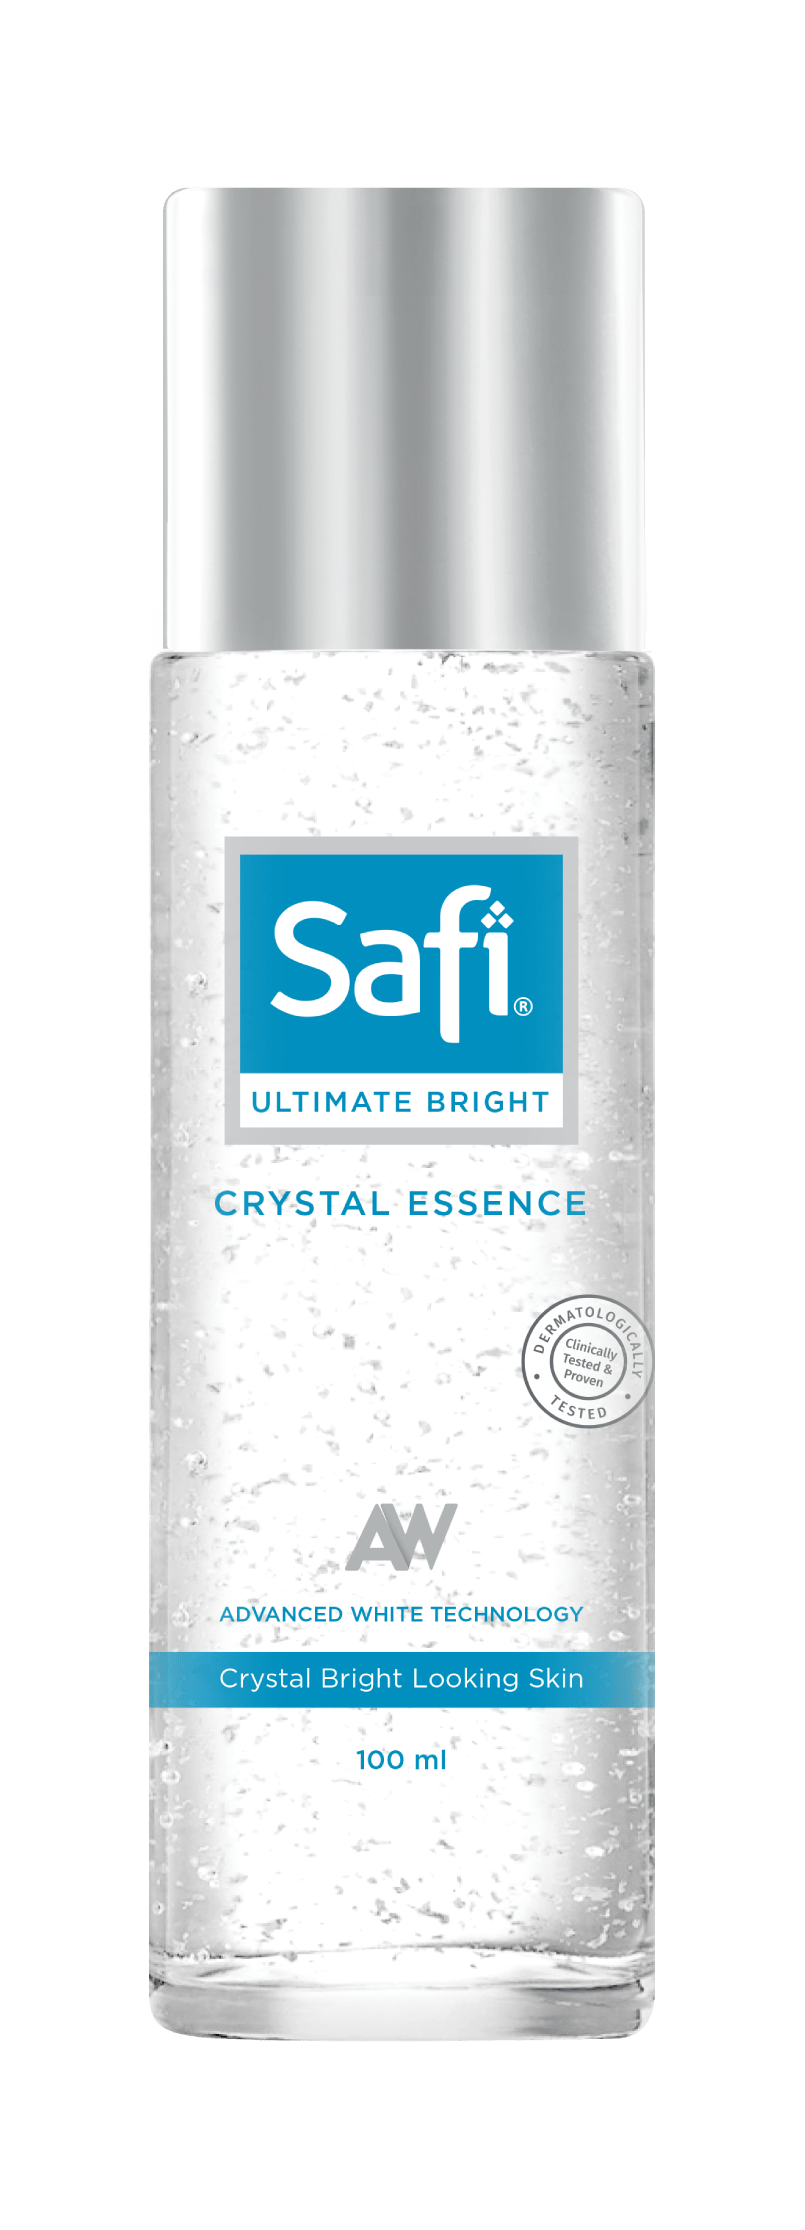  - Safi Ultimate Bright Crystal Essence